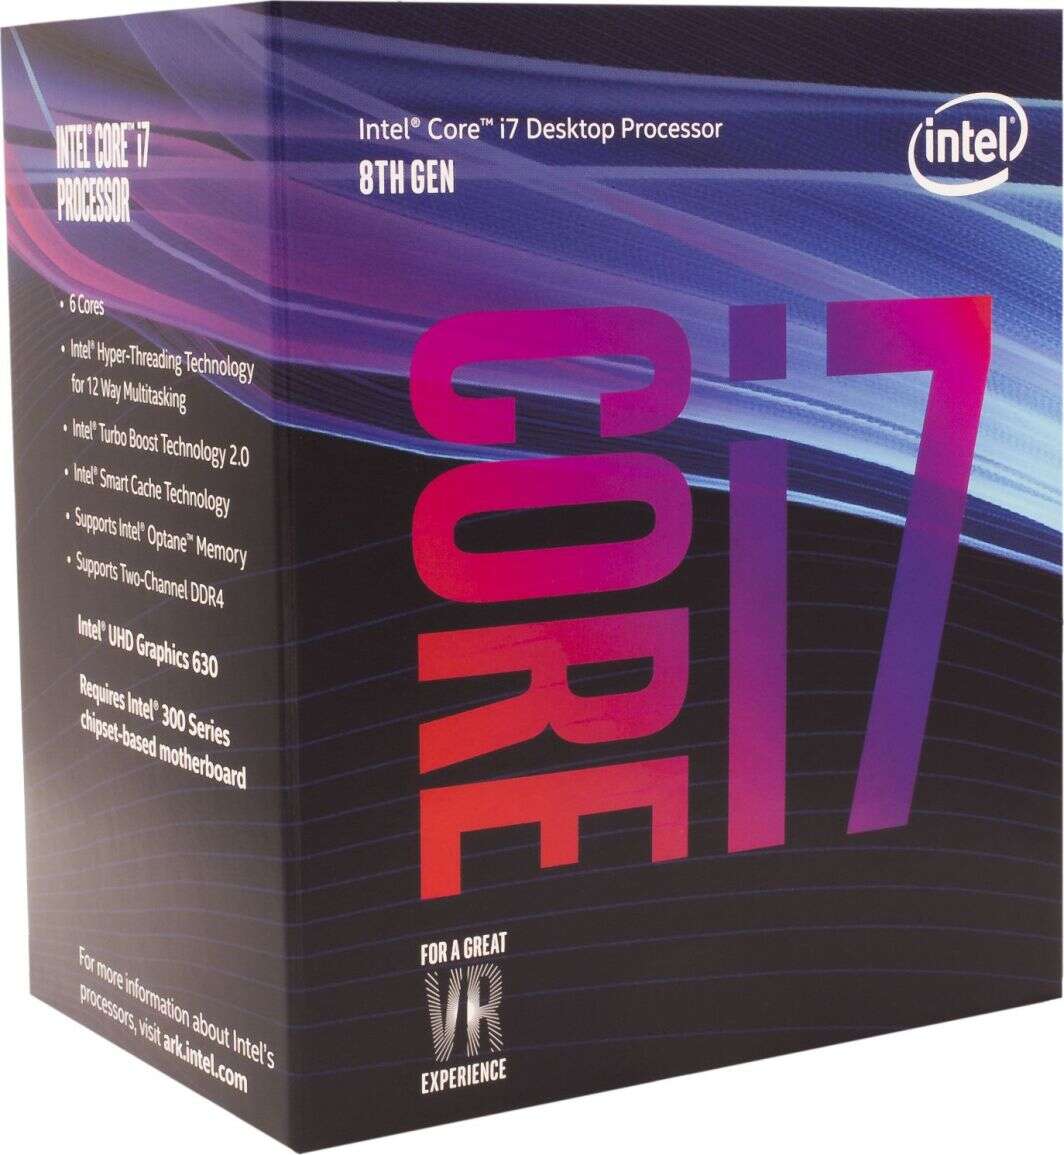 test Intel Core i7-8700K, recenzja Intel Core i7-8700K, review Intel Core i7-8700K, opinia Intel Core i7-8700K, cena Intel Core i7-8700K, wydajność Intel Core i7-8700K, gry Intel Core i7-8700K, test 8700K, recenzja 8700K, review 8700K, opinia 8700K, cena 8700K, czy warto 8700K, wydajność 8700K, gry 8700K,